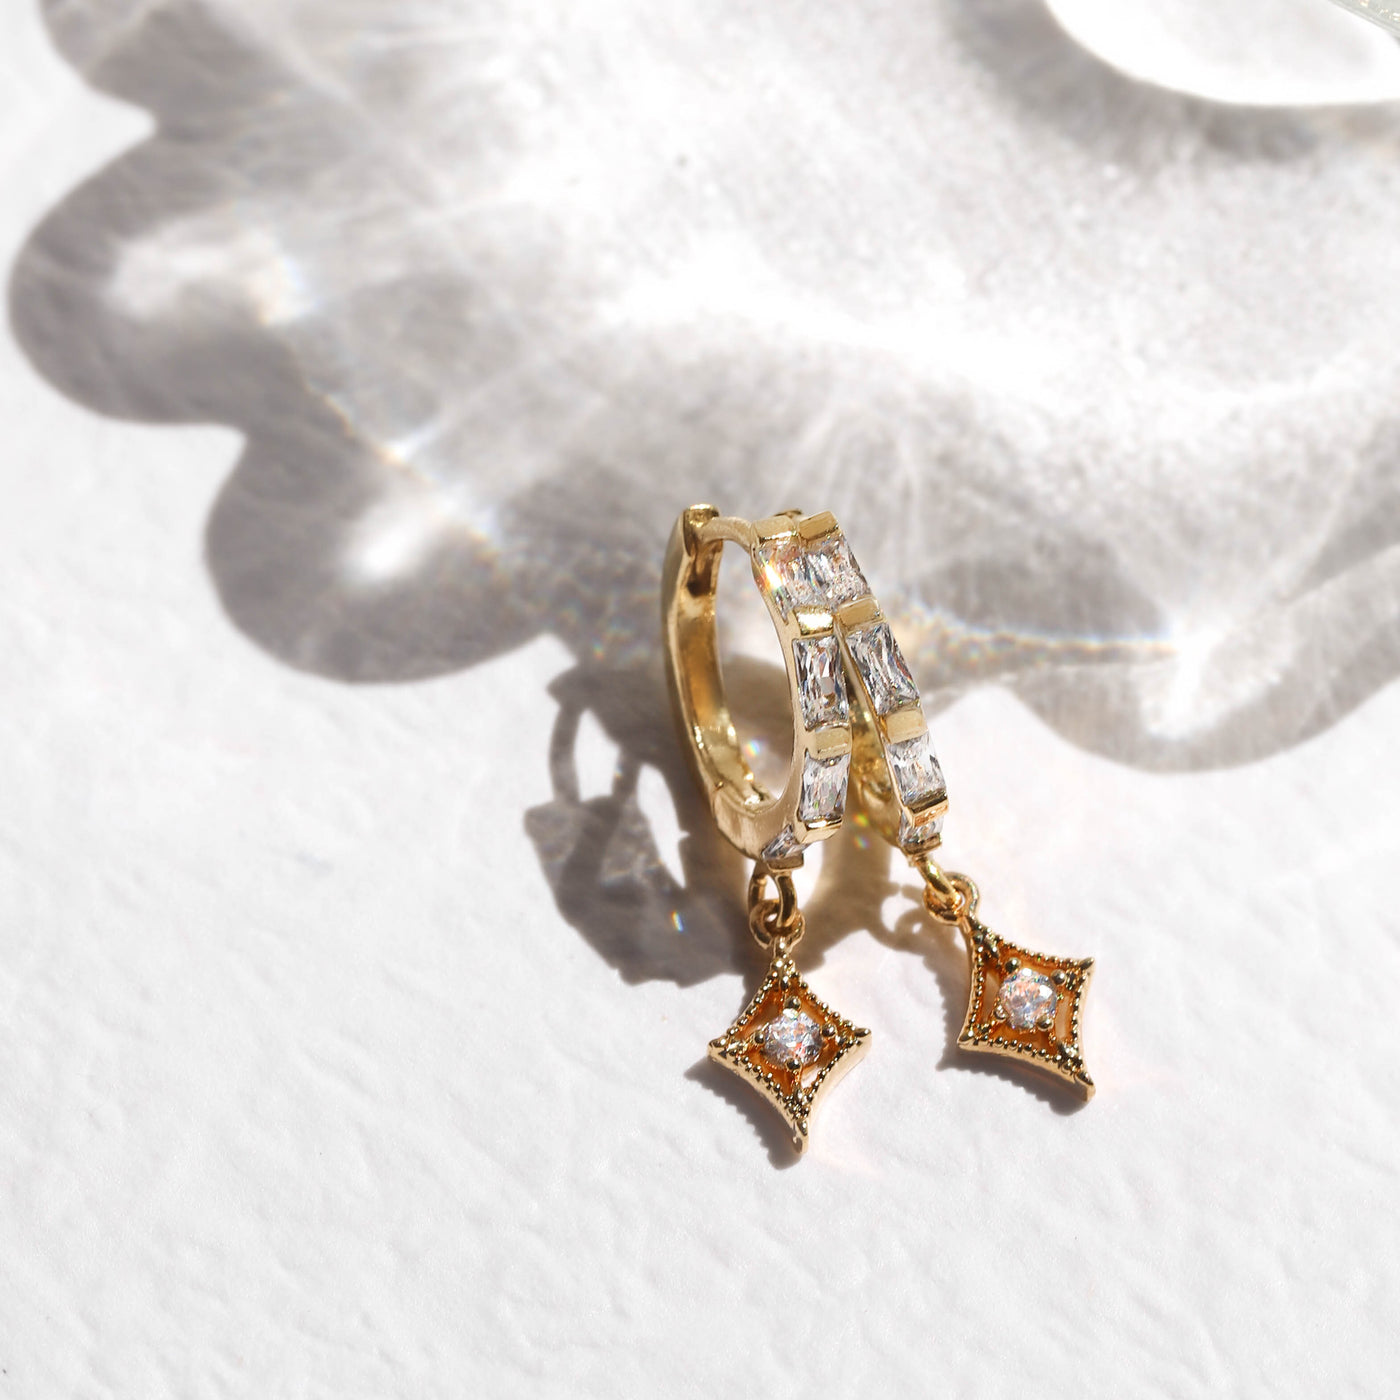 Gold diamond huggie earrings